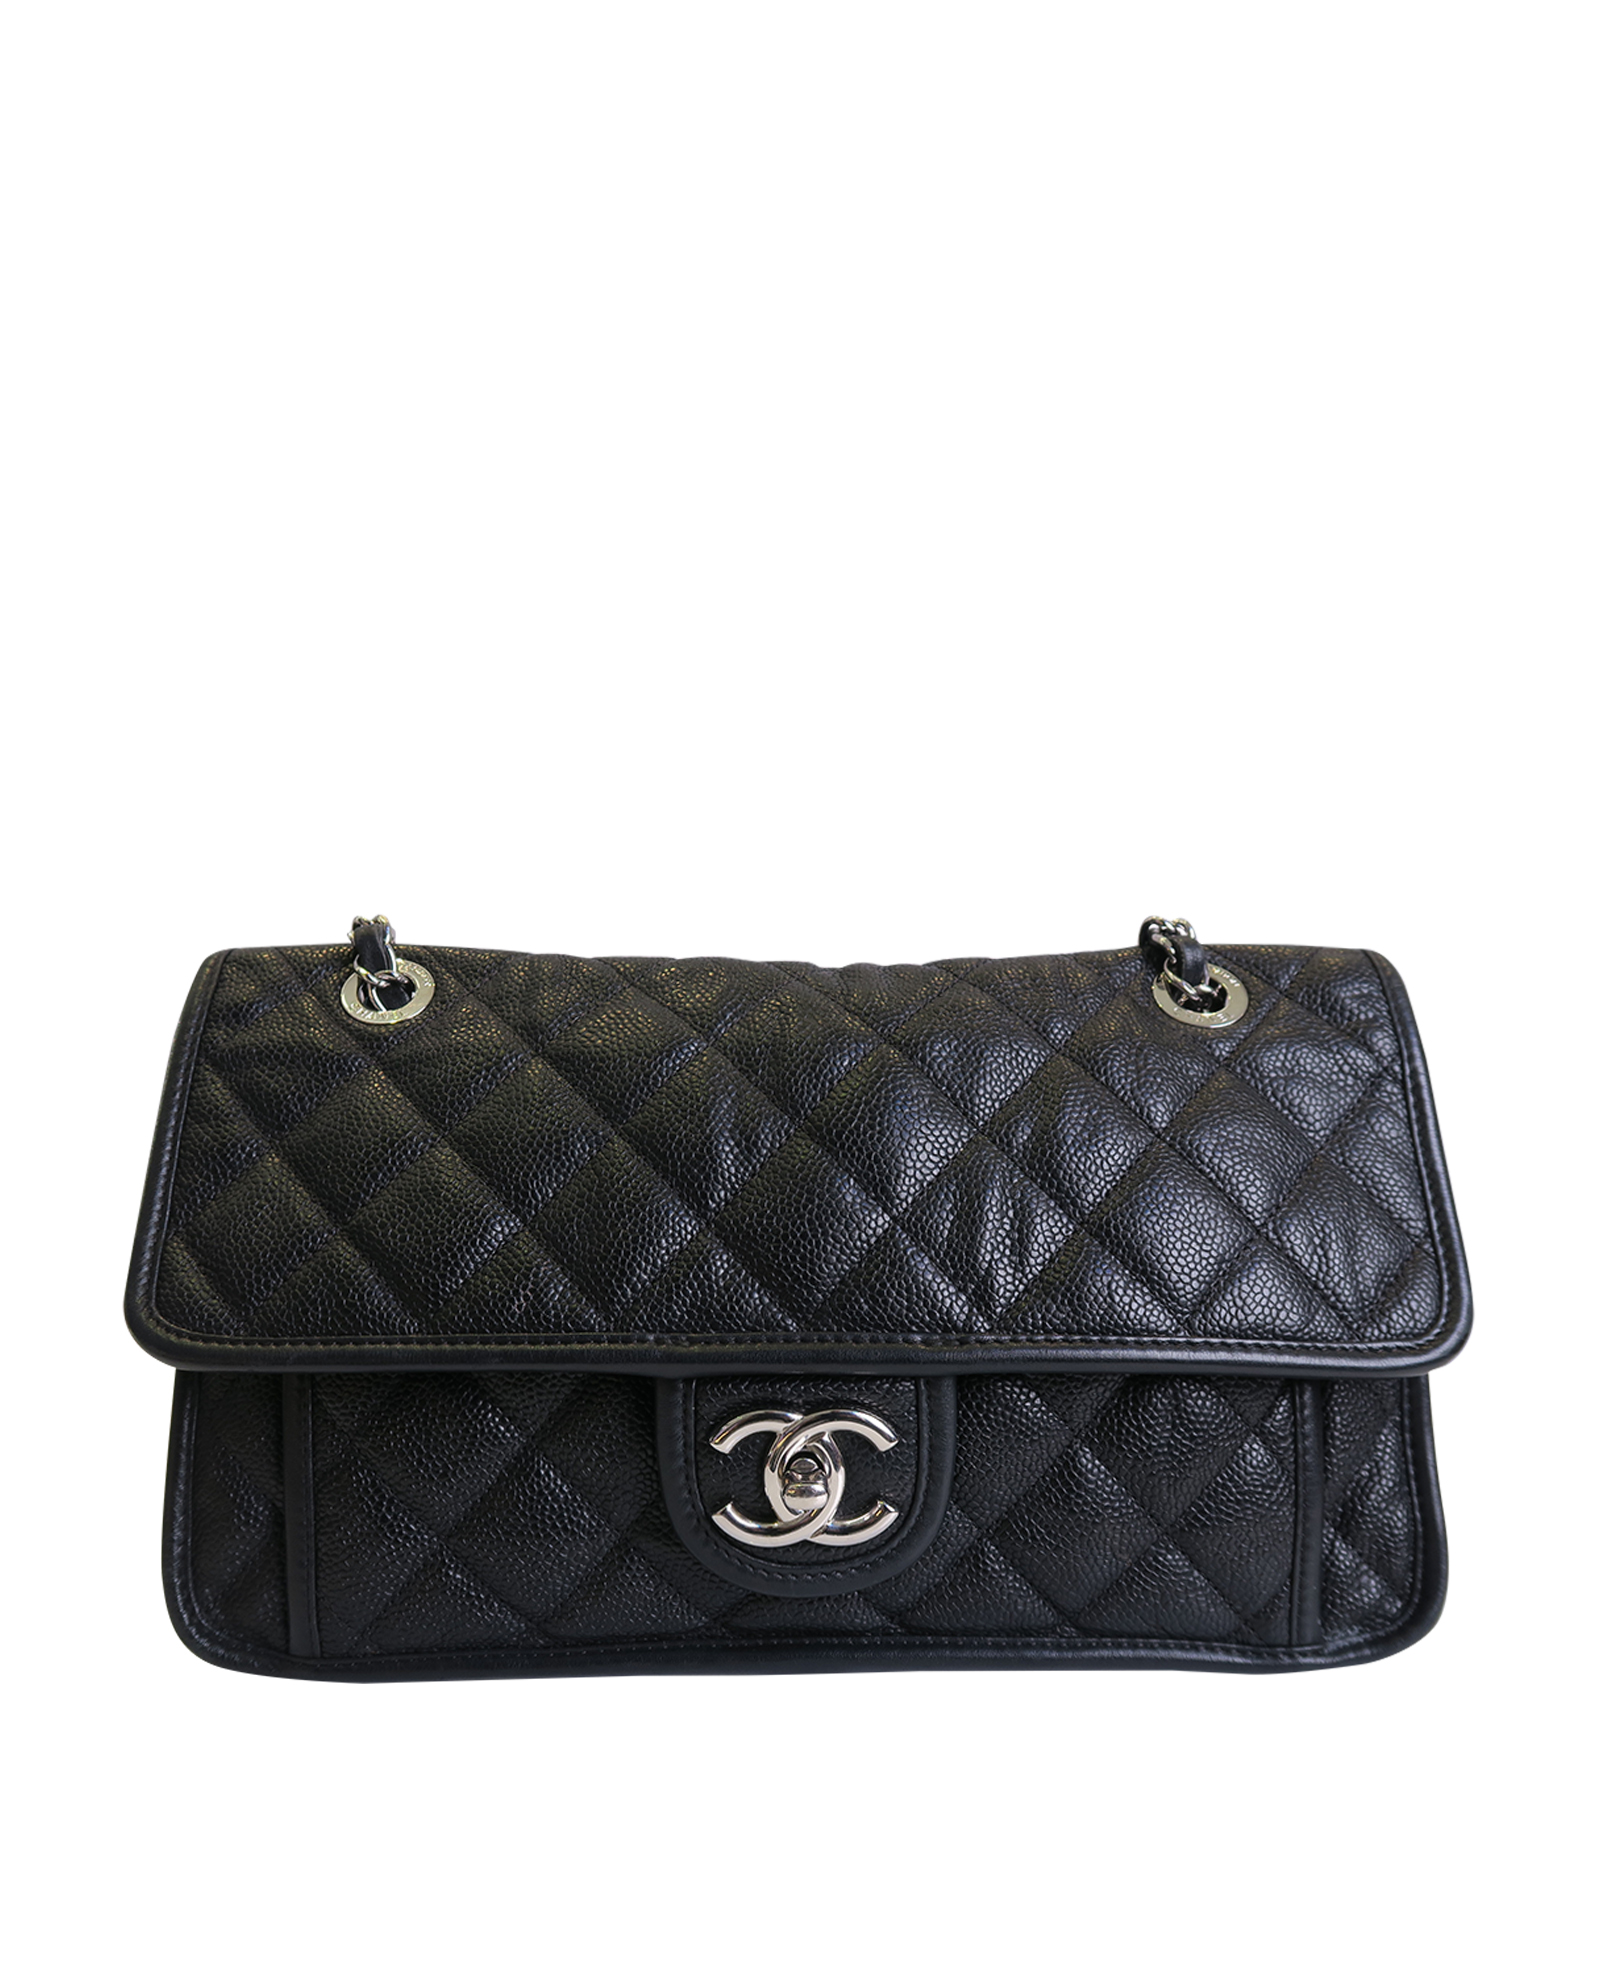 French Riviera Flap Bag, Chanel - Designer Exchange